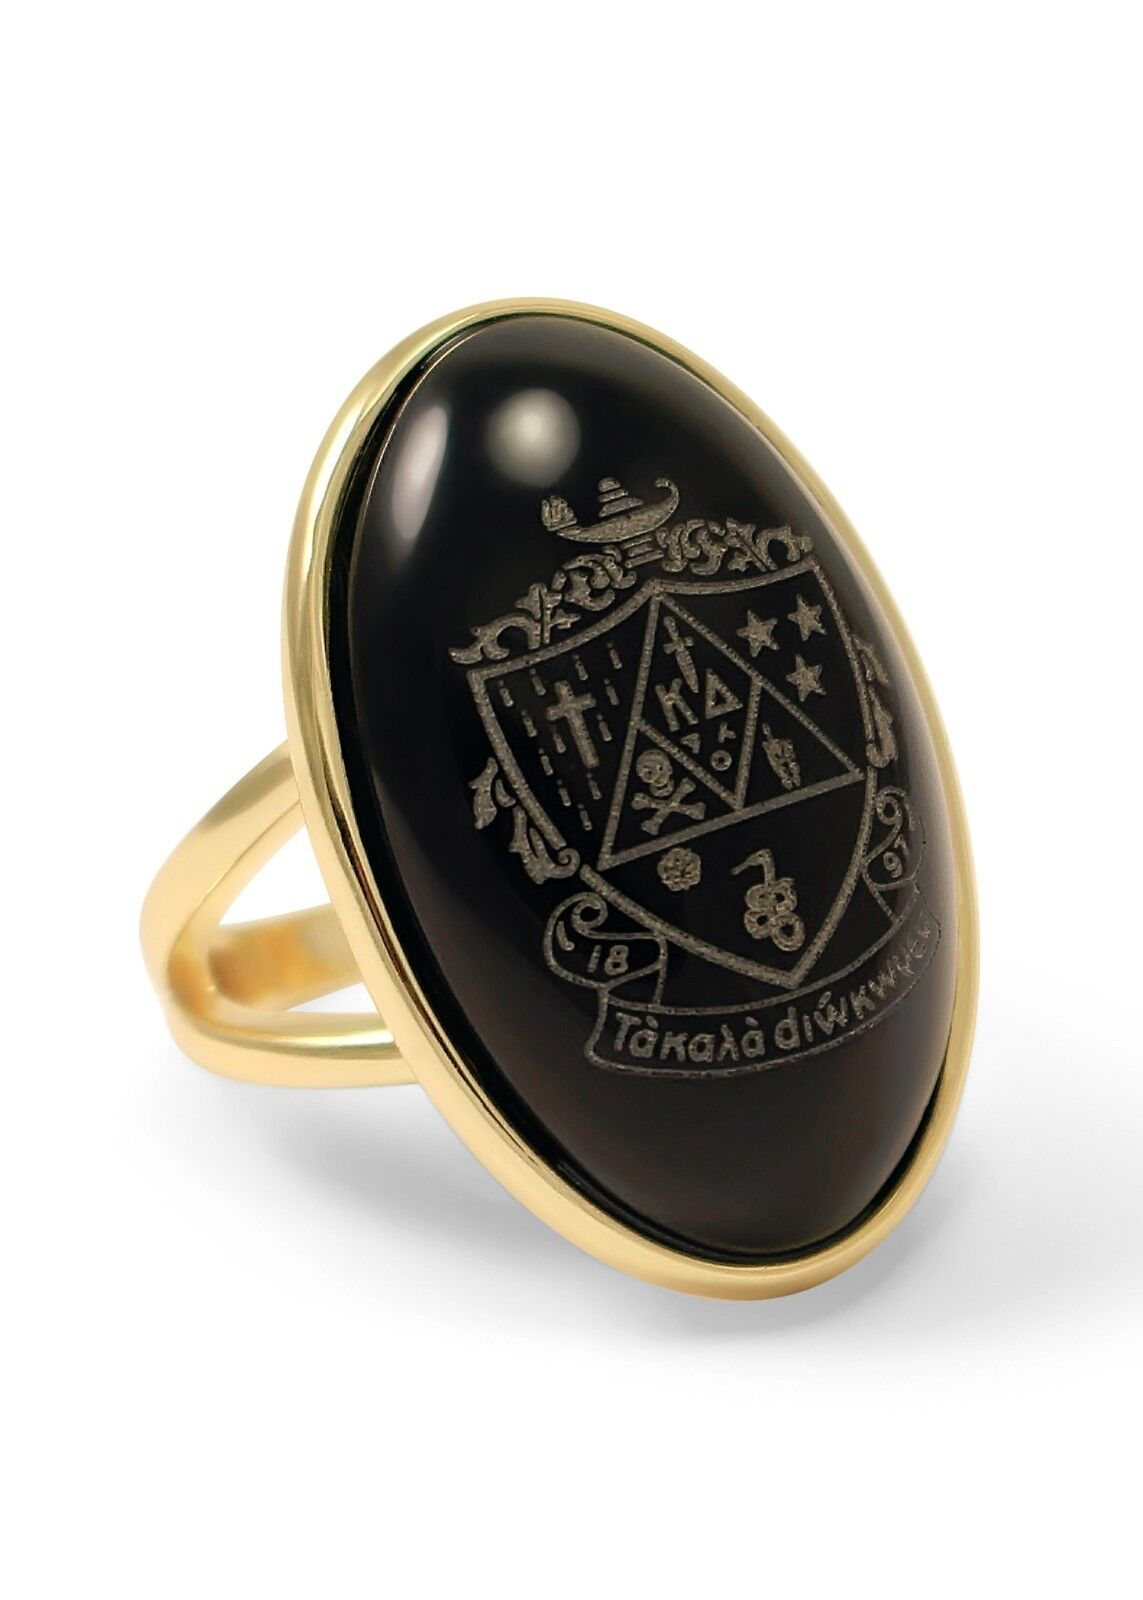 Kappa Delta Sorority Duchess Ring - 14k Gold Plated & Black Onyx- New